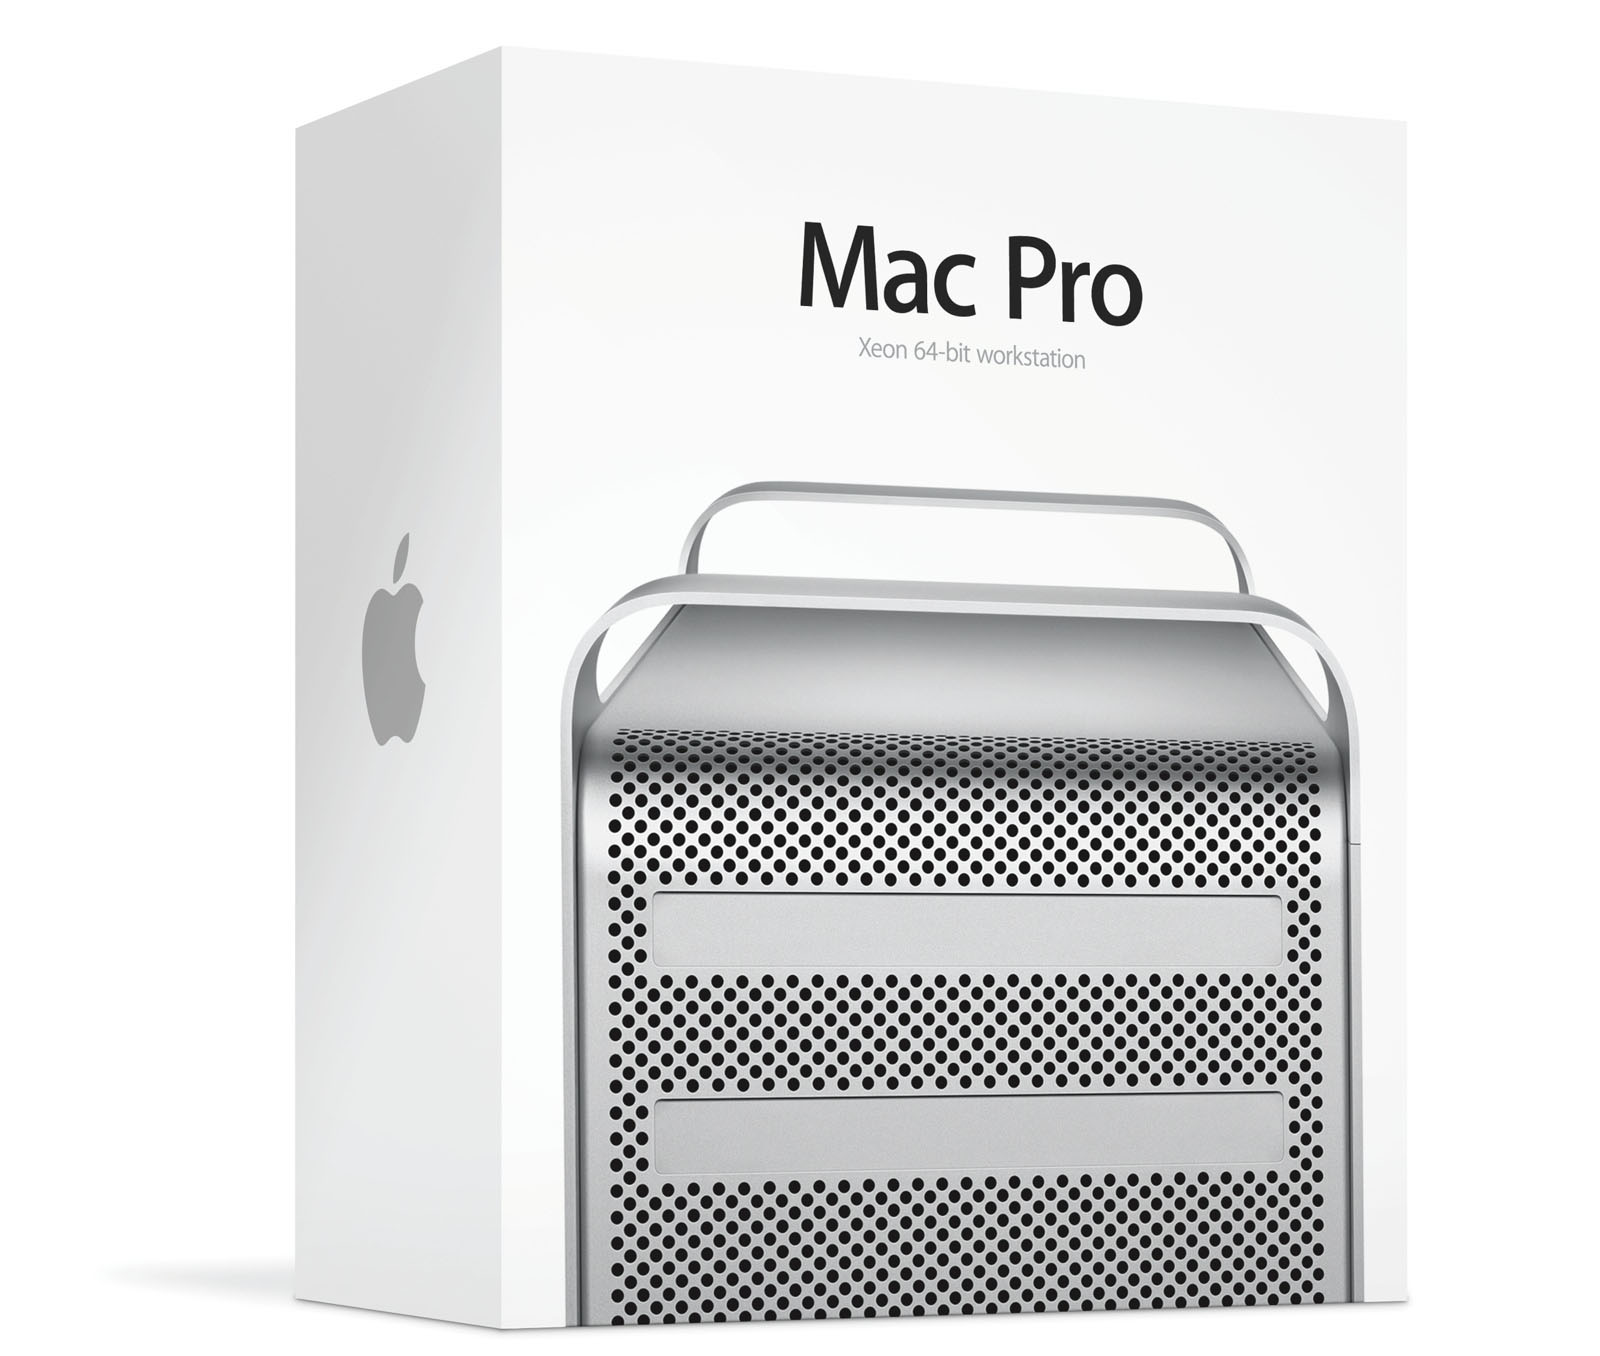 Pro 1.16 5. Apple Mac Pro 5.1. Apple 12 Core 5,1 Mac Pro. Mac Pro 1,1 2006. Thunderbolt Mac Pro 5.1.